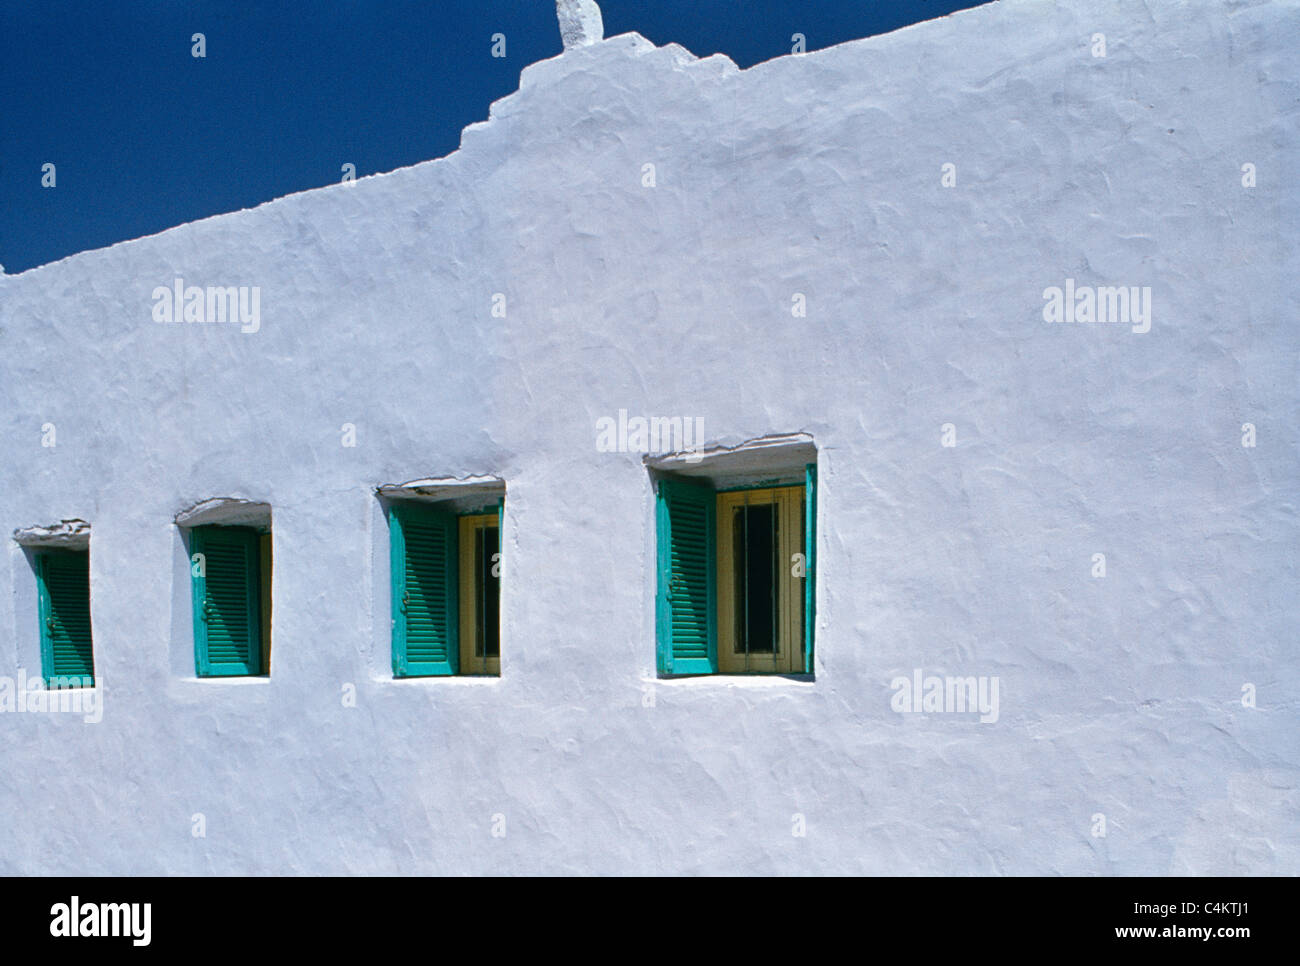 Nr Abha Asir Saudi Arabia Farm House Close Up showing thick Walls and small Windows & Shutters Stock Photo